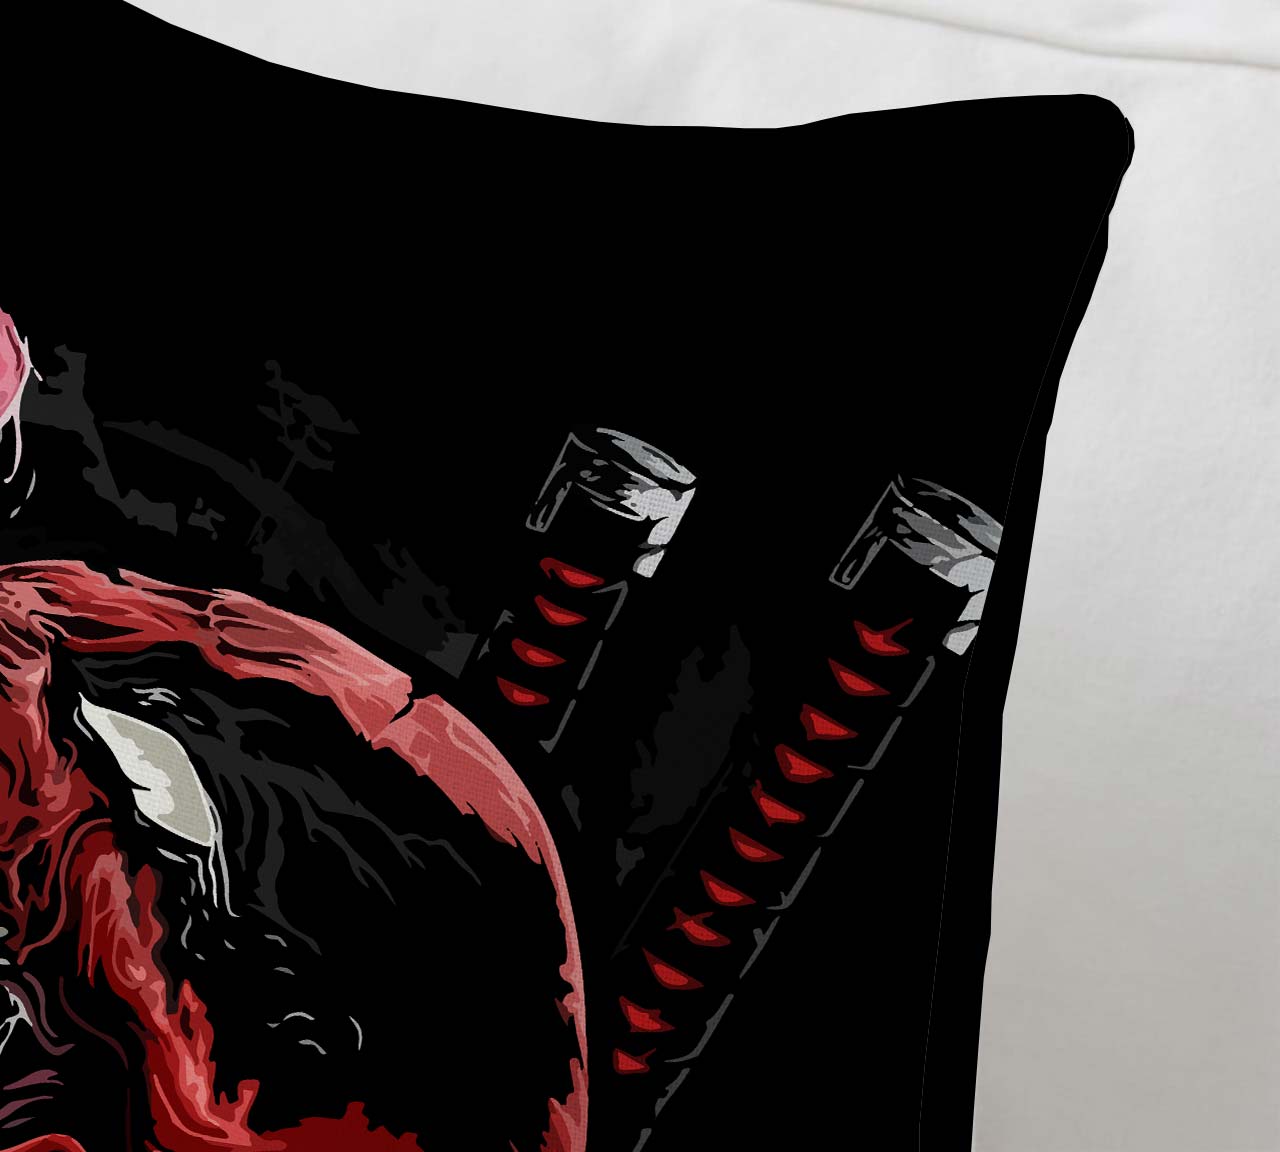 Deadpool x Venom Cushion Cover trendy home